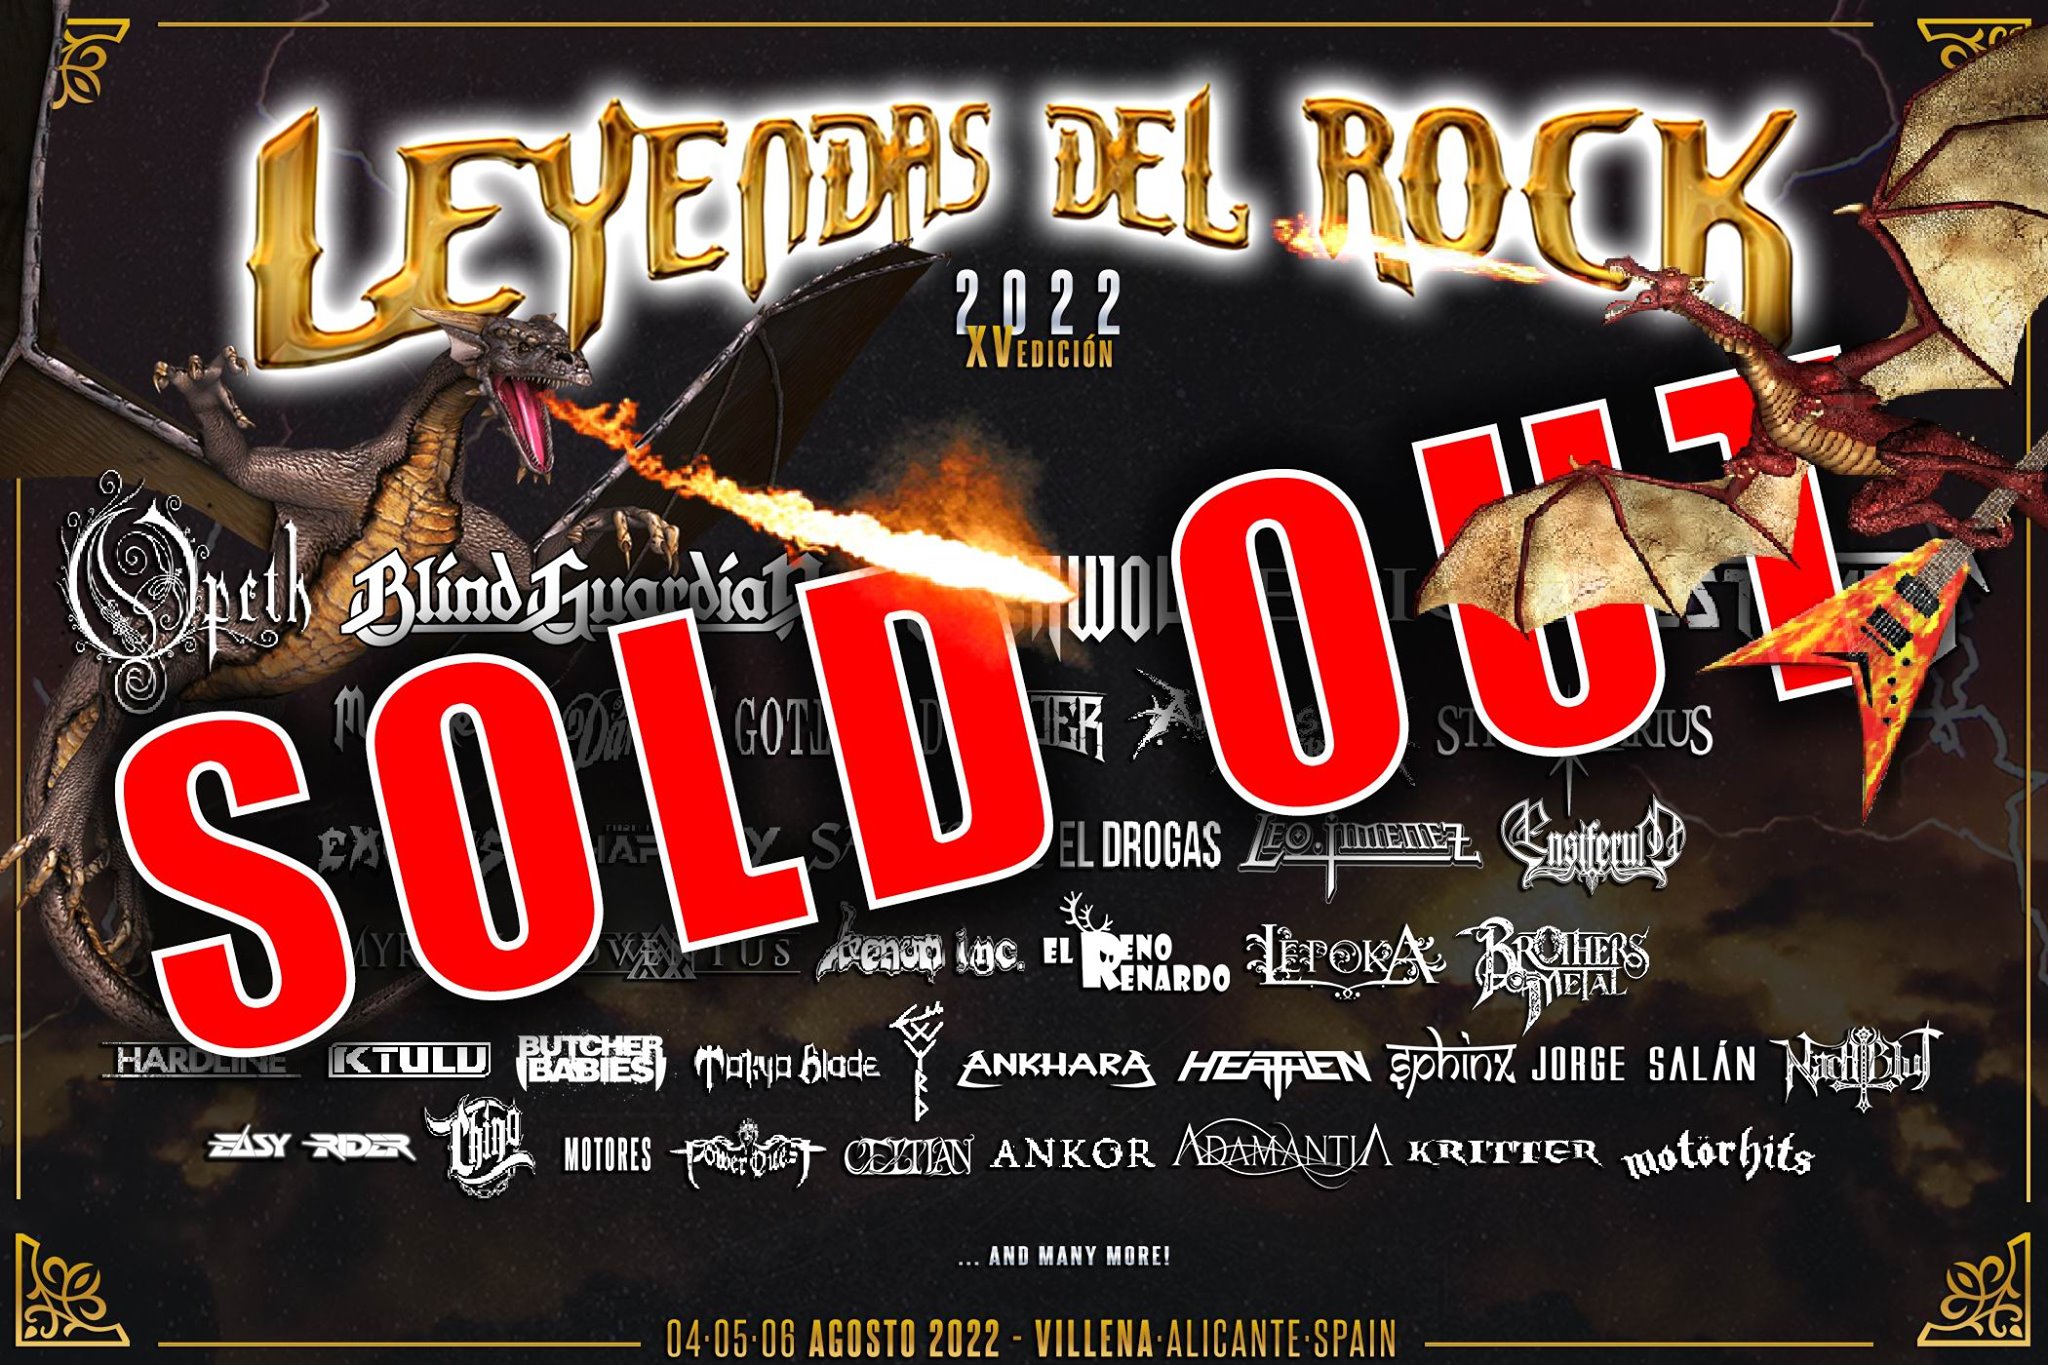 leyendas del rock 2022 - sold out